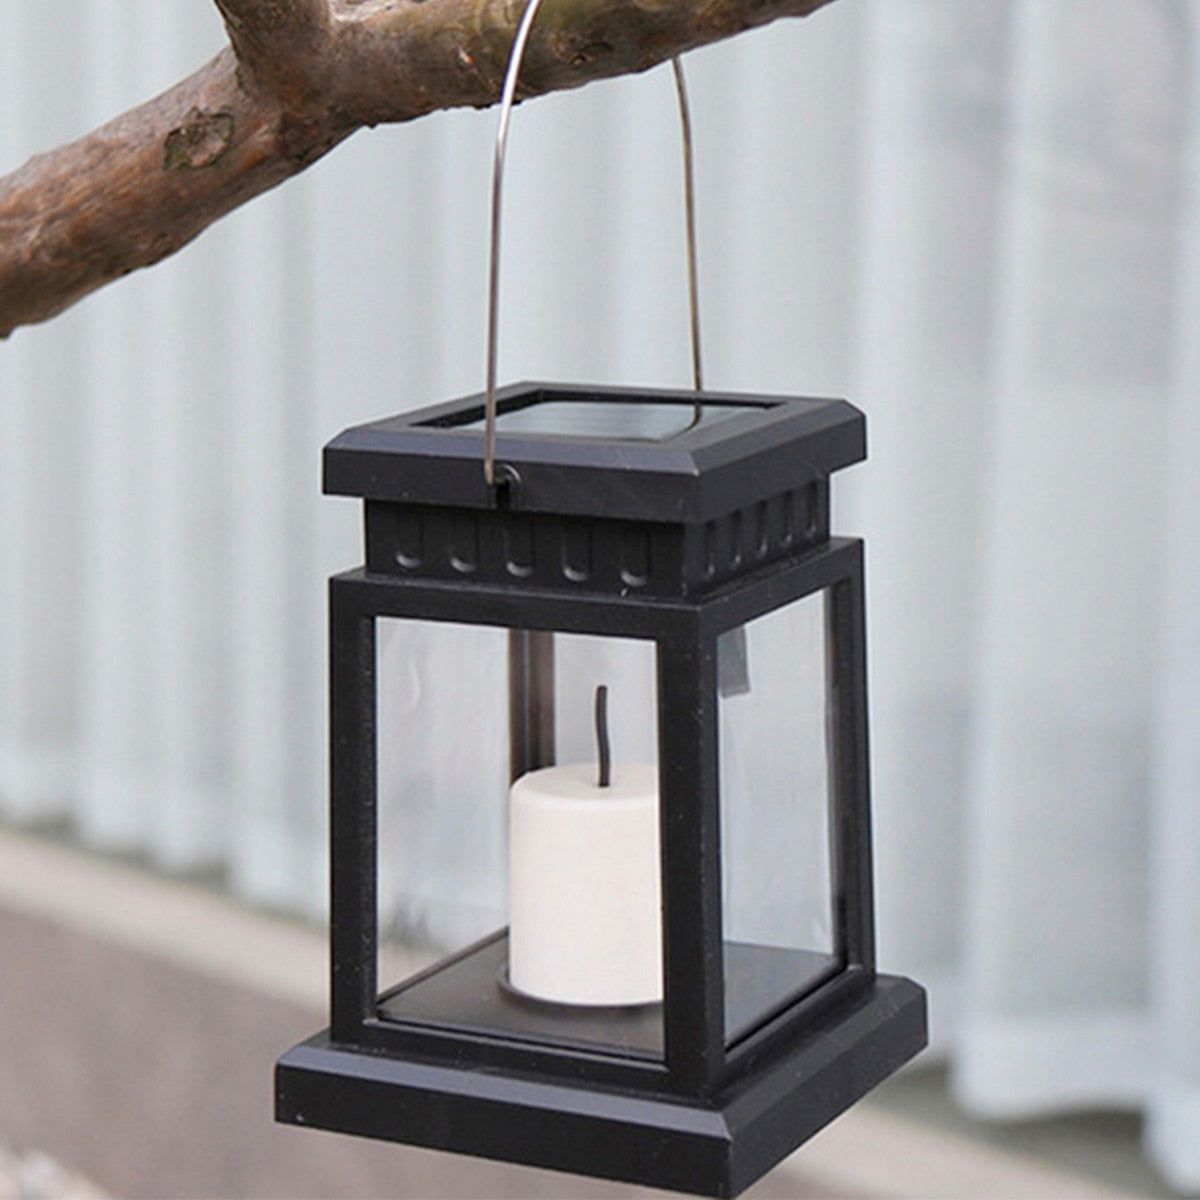 Lantern Garden Lamp Solar LED Candle Light Floor